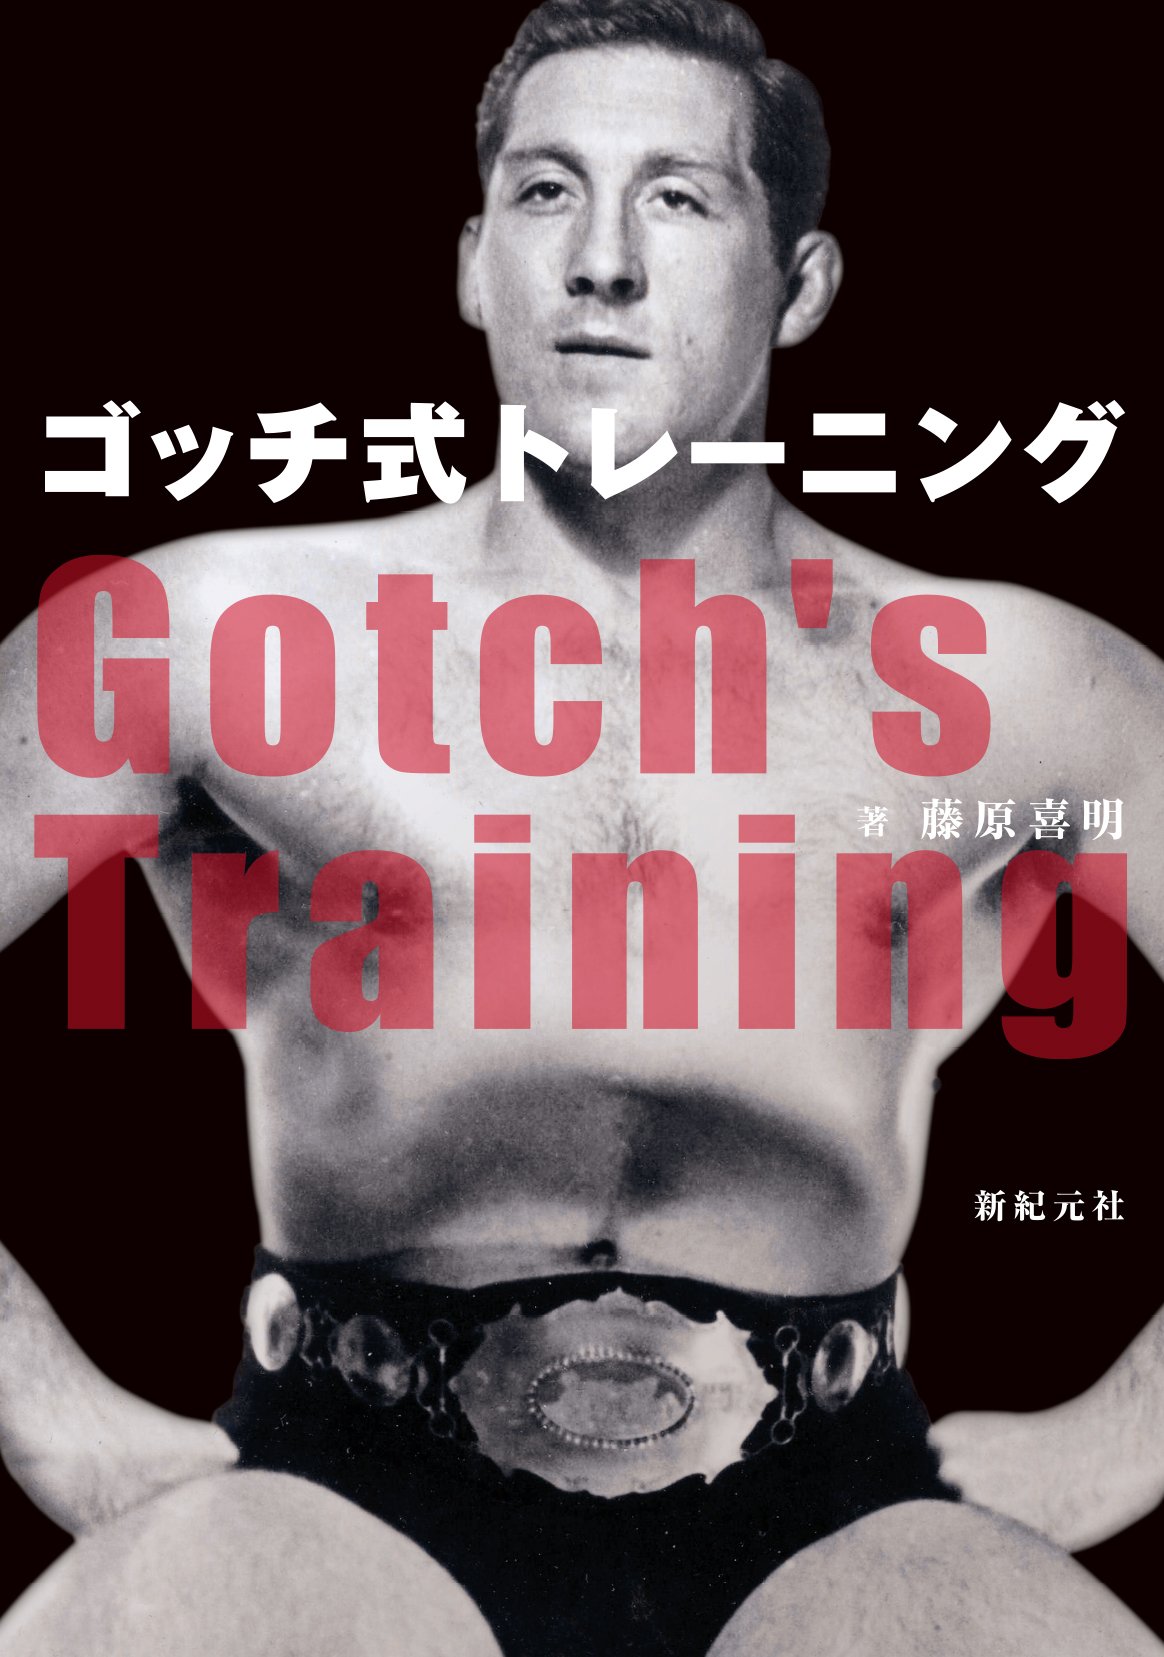 Karl Gotch's Training Book by Yoshiaki Fujiwara - Budovideos Inc